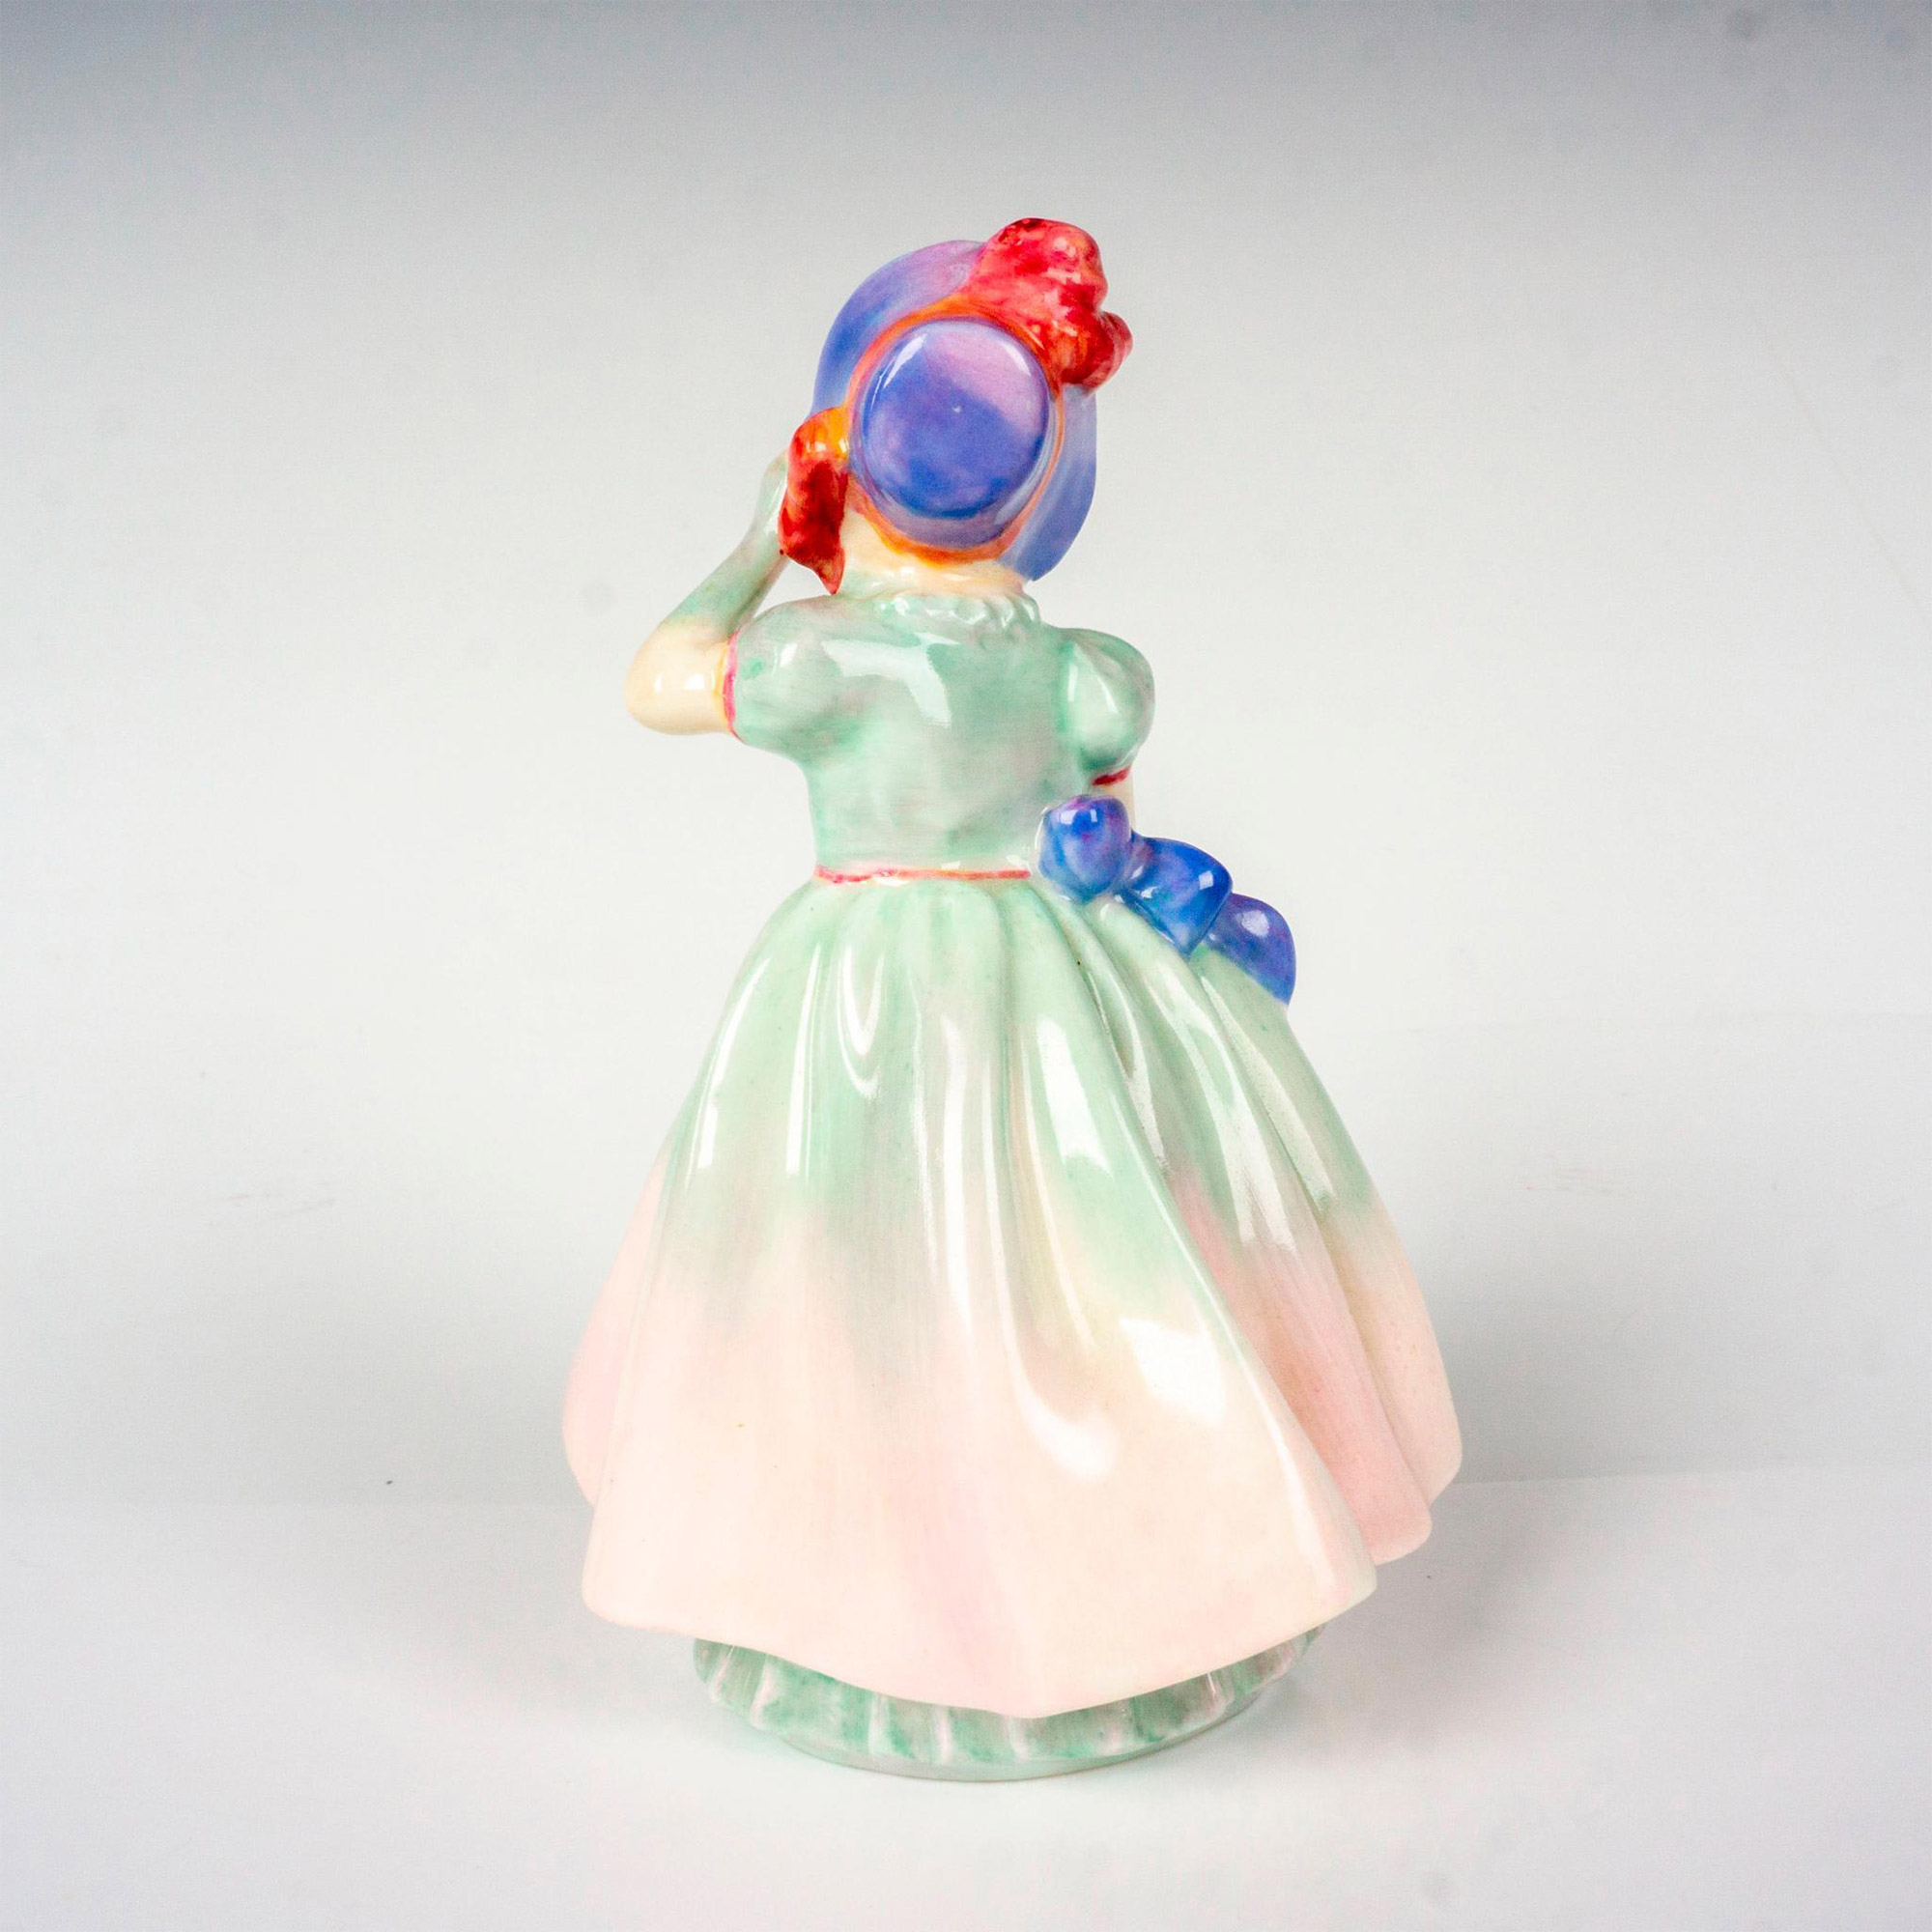 Babie - HN1679 - Royal Doulton Figurine - Image 2 of 3